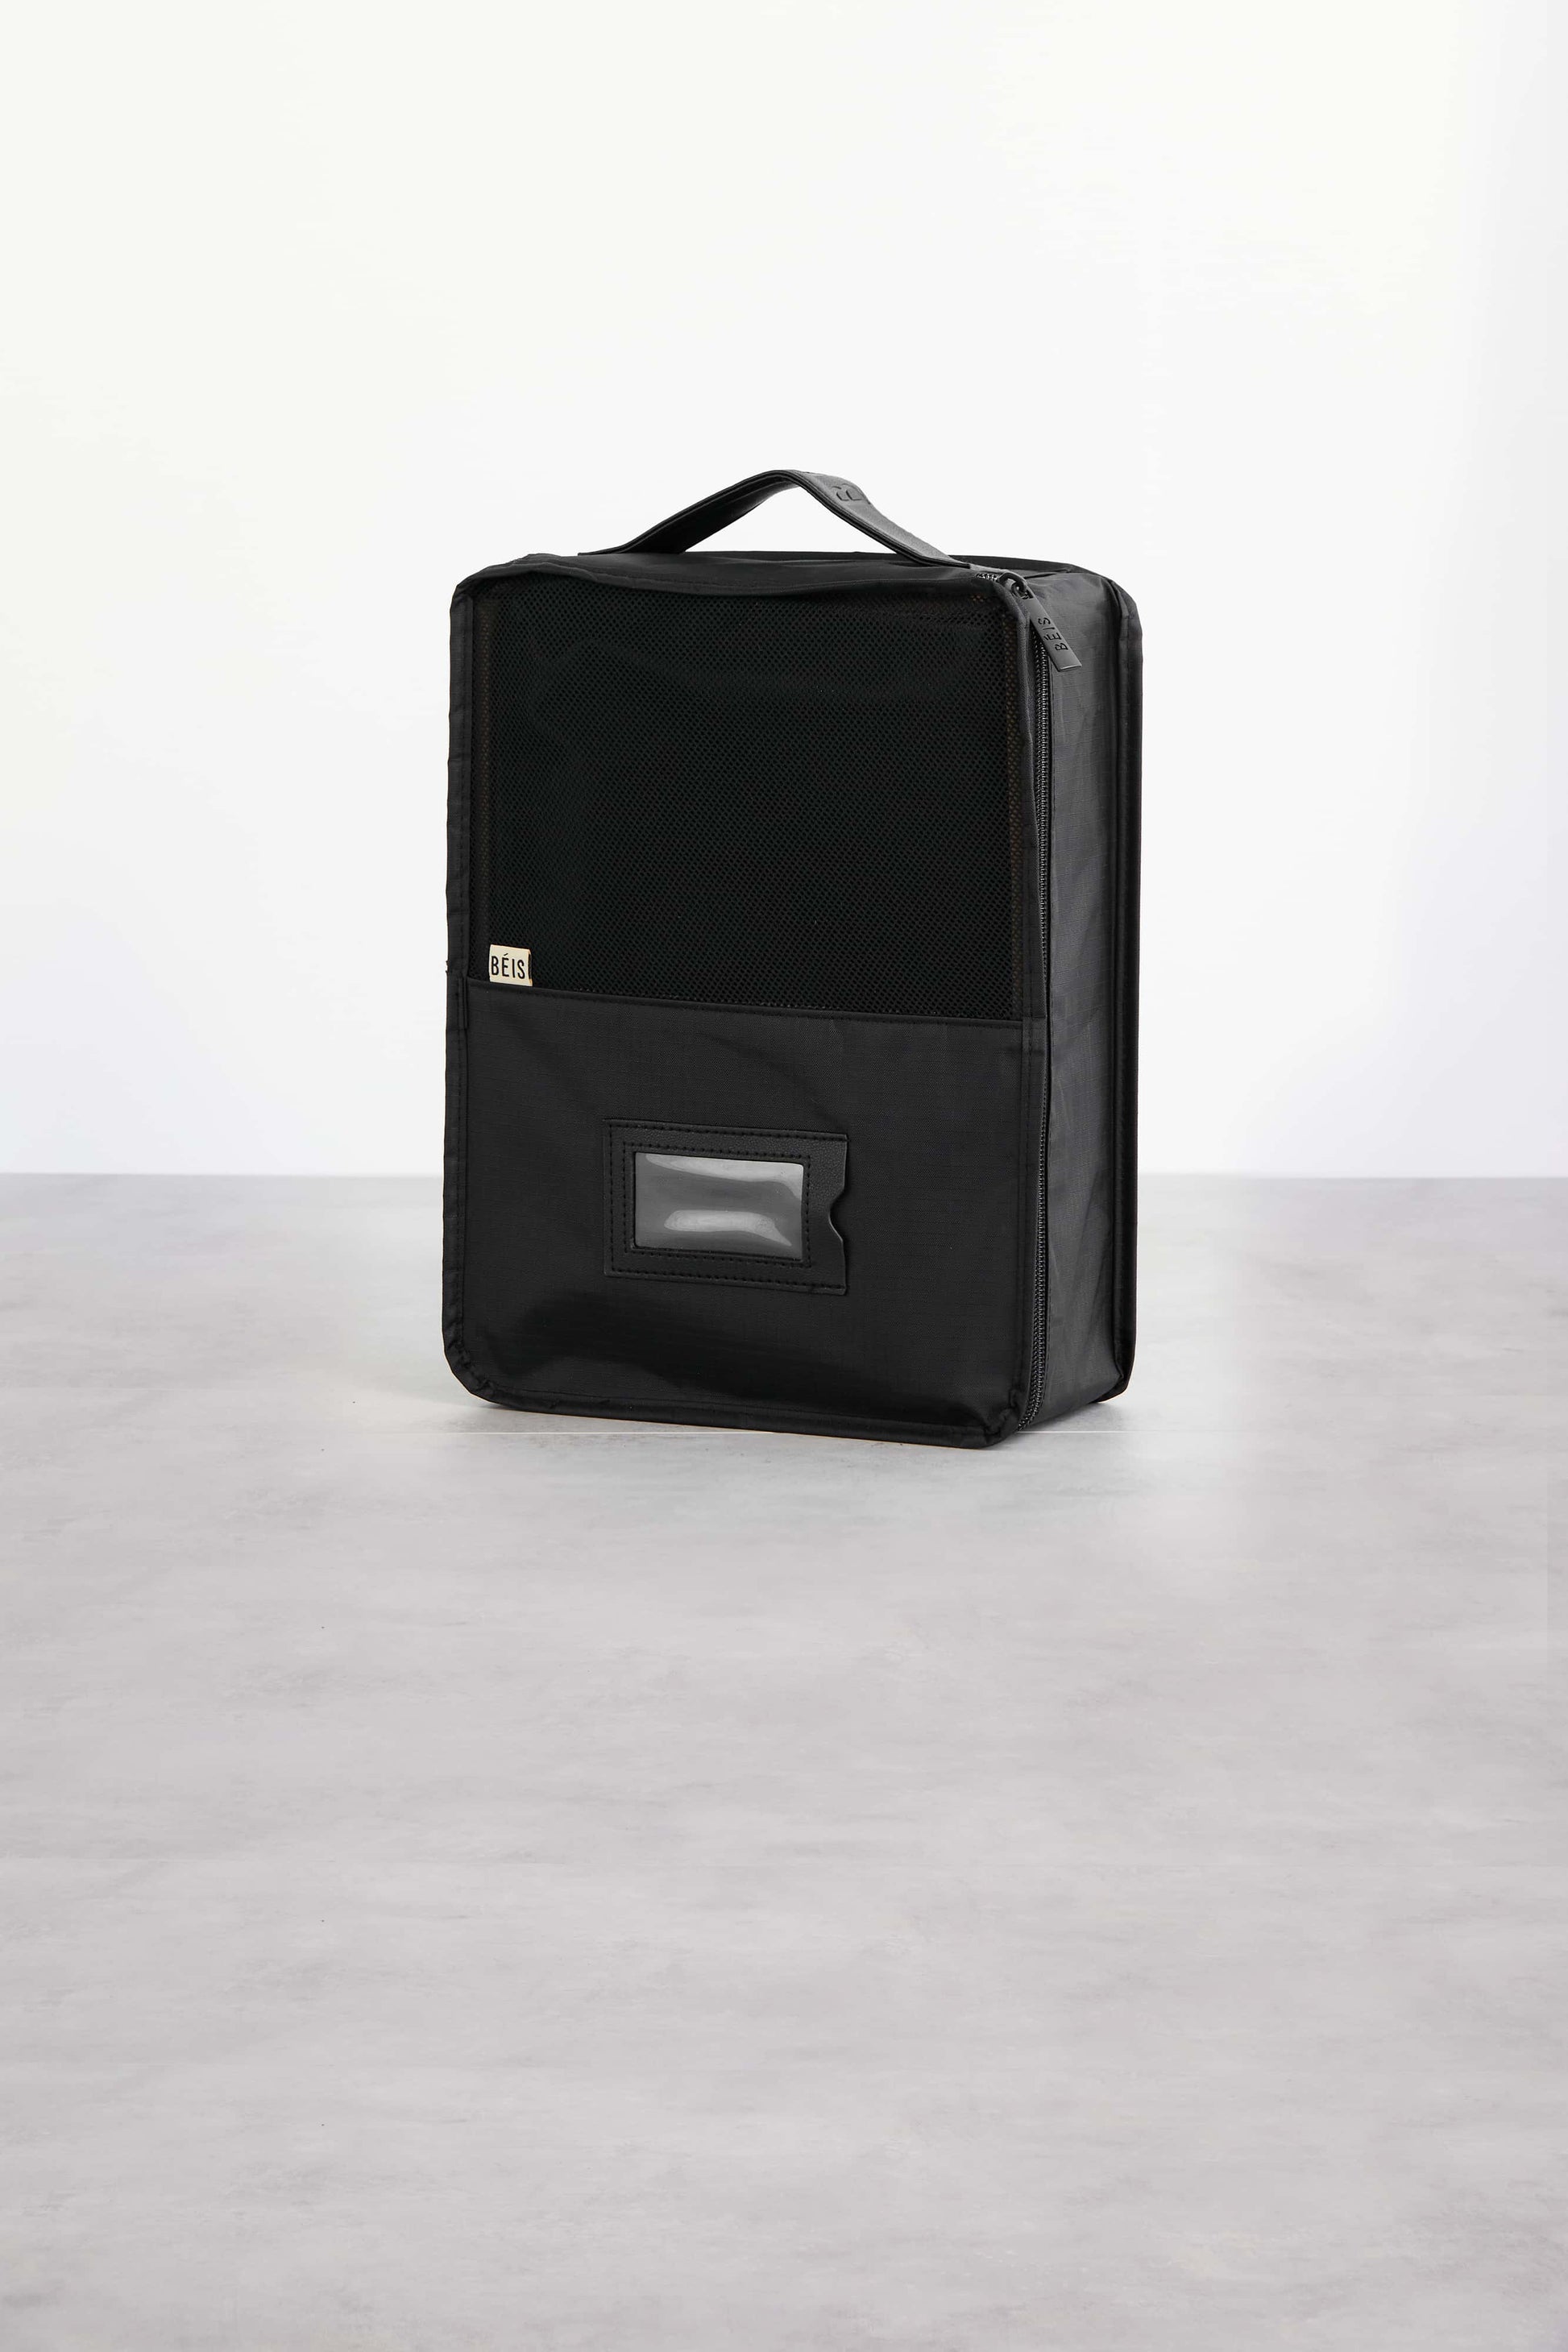 FlightDeck Traveler's Compression Packing Cubes - For Checked Bags –  FlightDeck Essentials